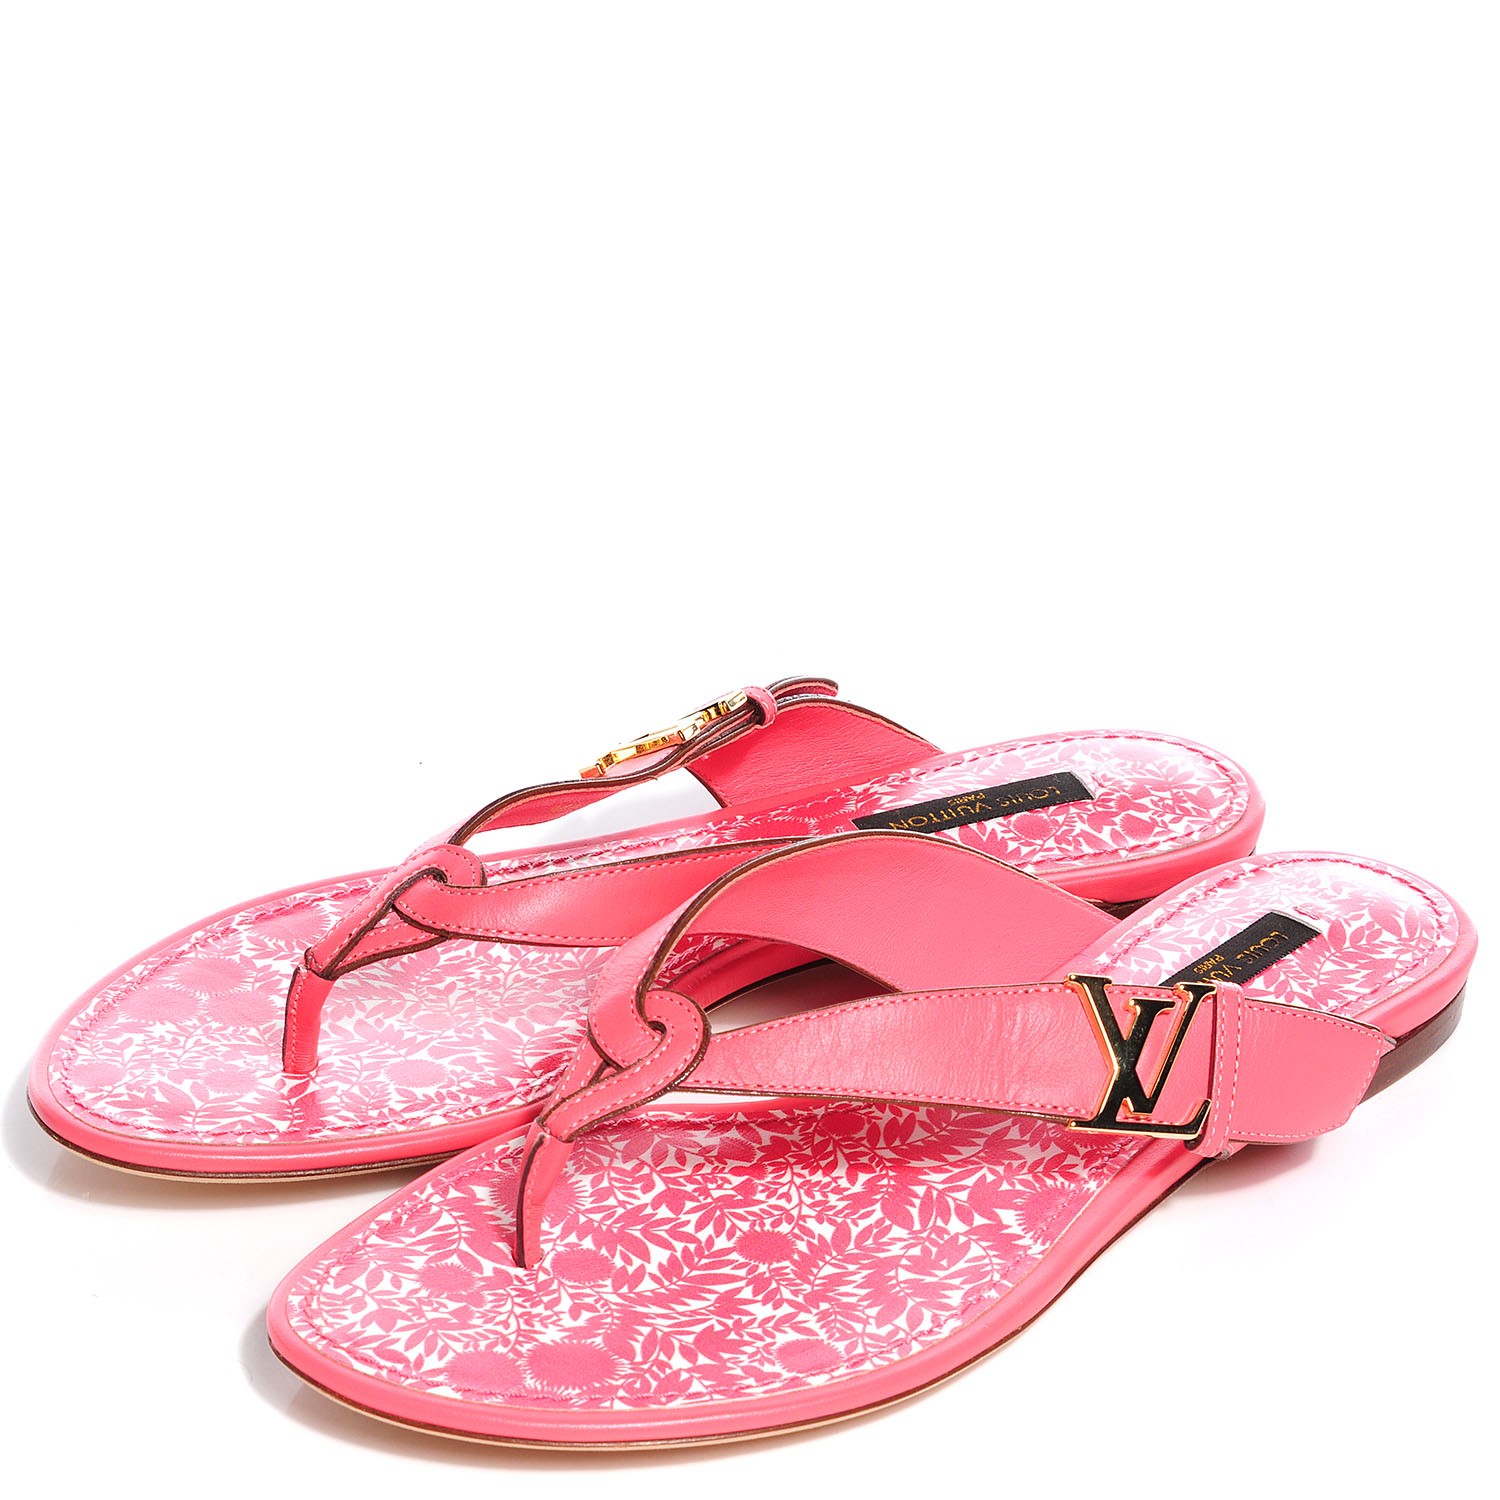 LOUIS VUITTON Tropical Knot Flat Thong Sandals Coral Size 37 92511